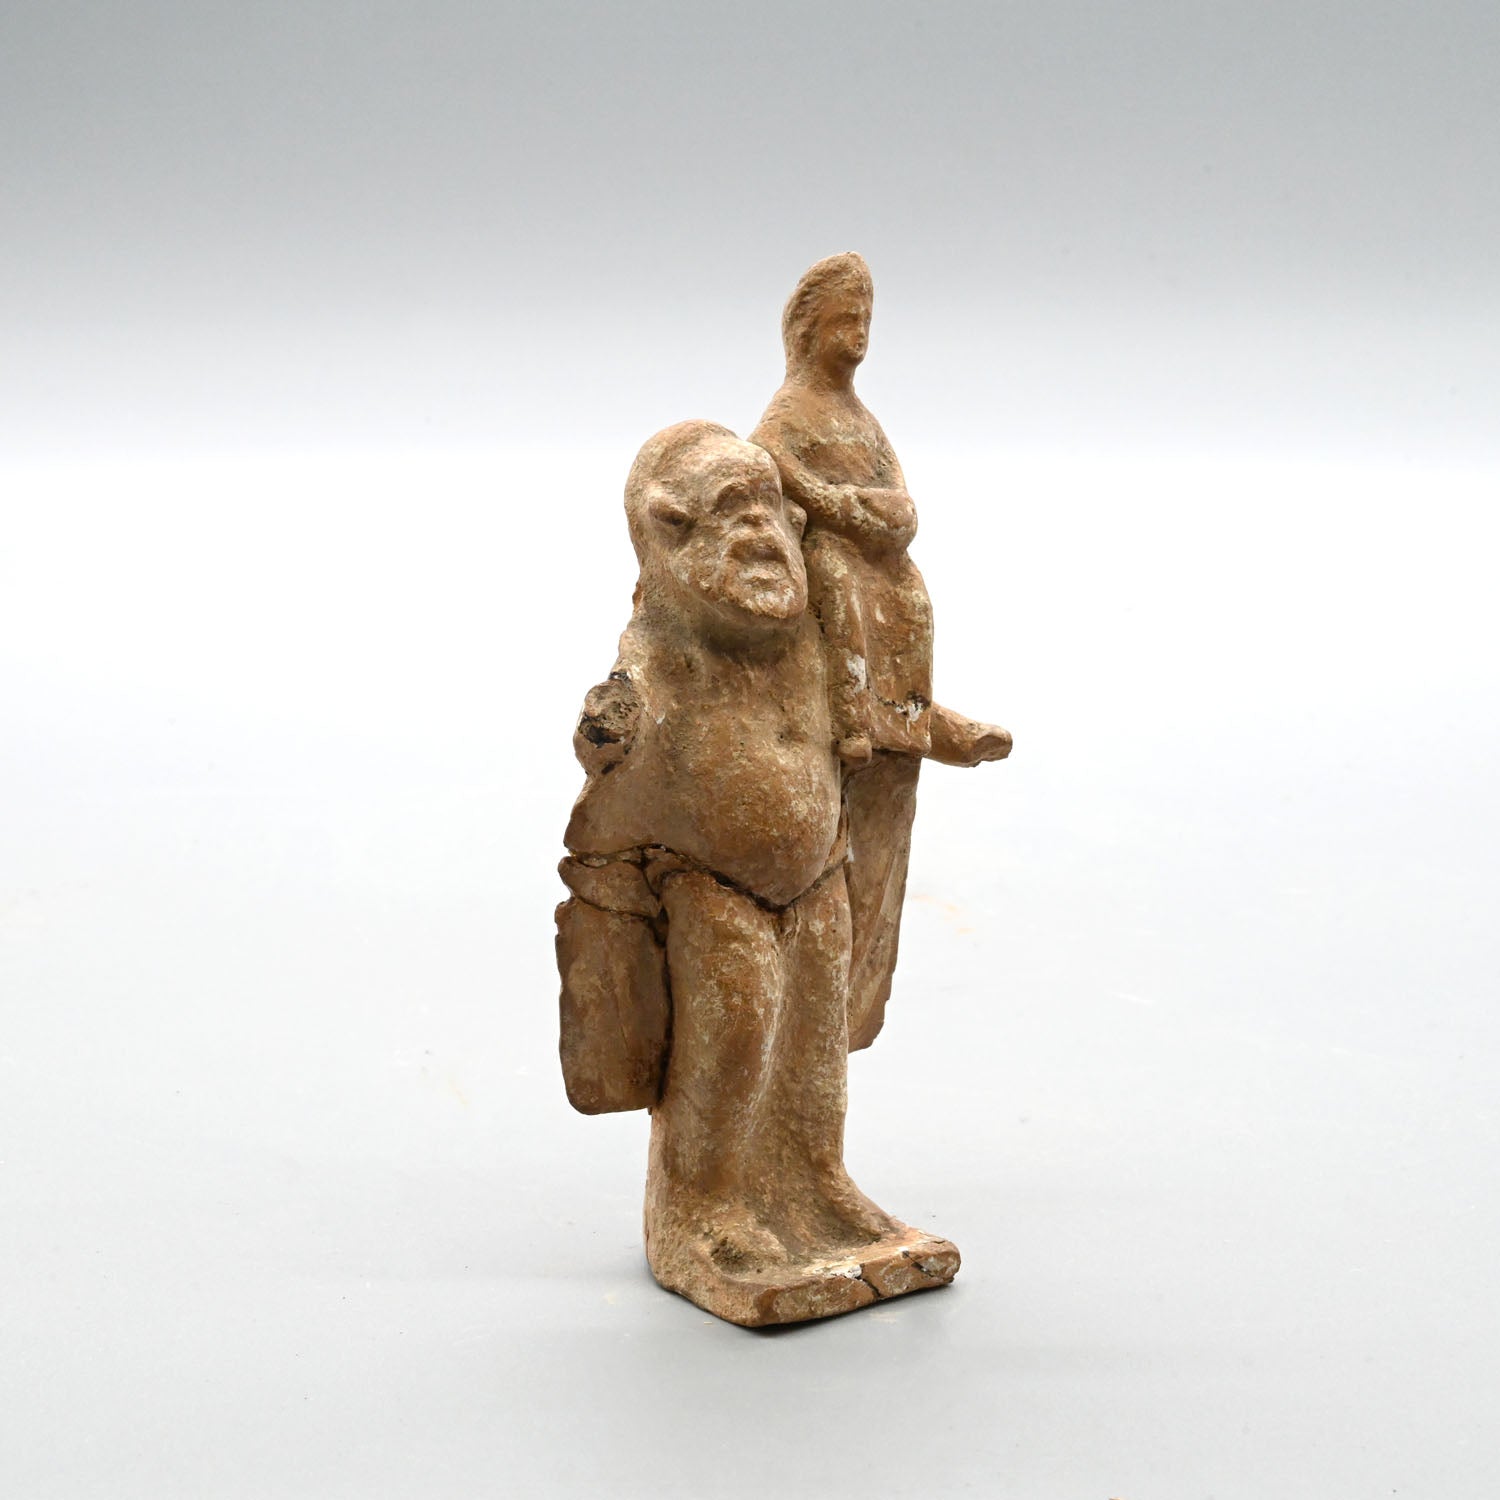 A Greek Figurine of Silenus, Hellenistic Period, ca. 3rd century BCE